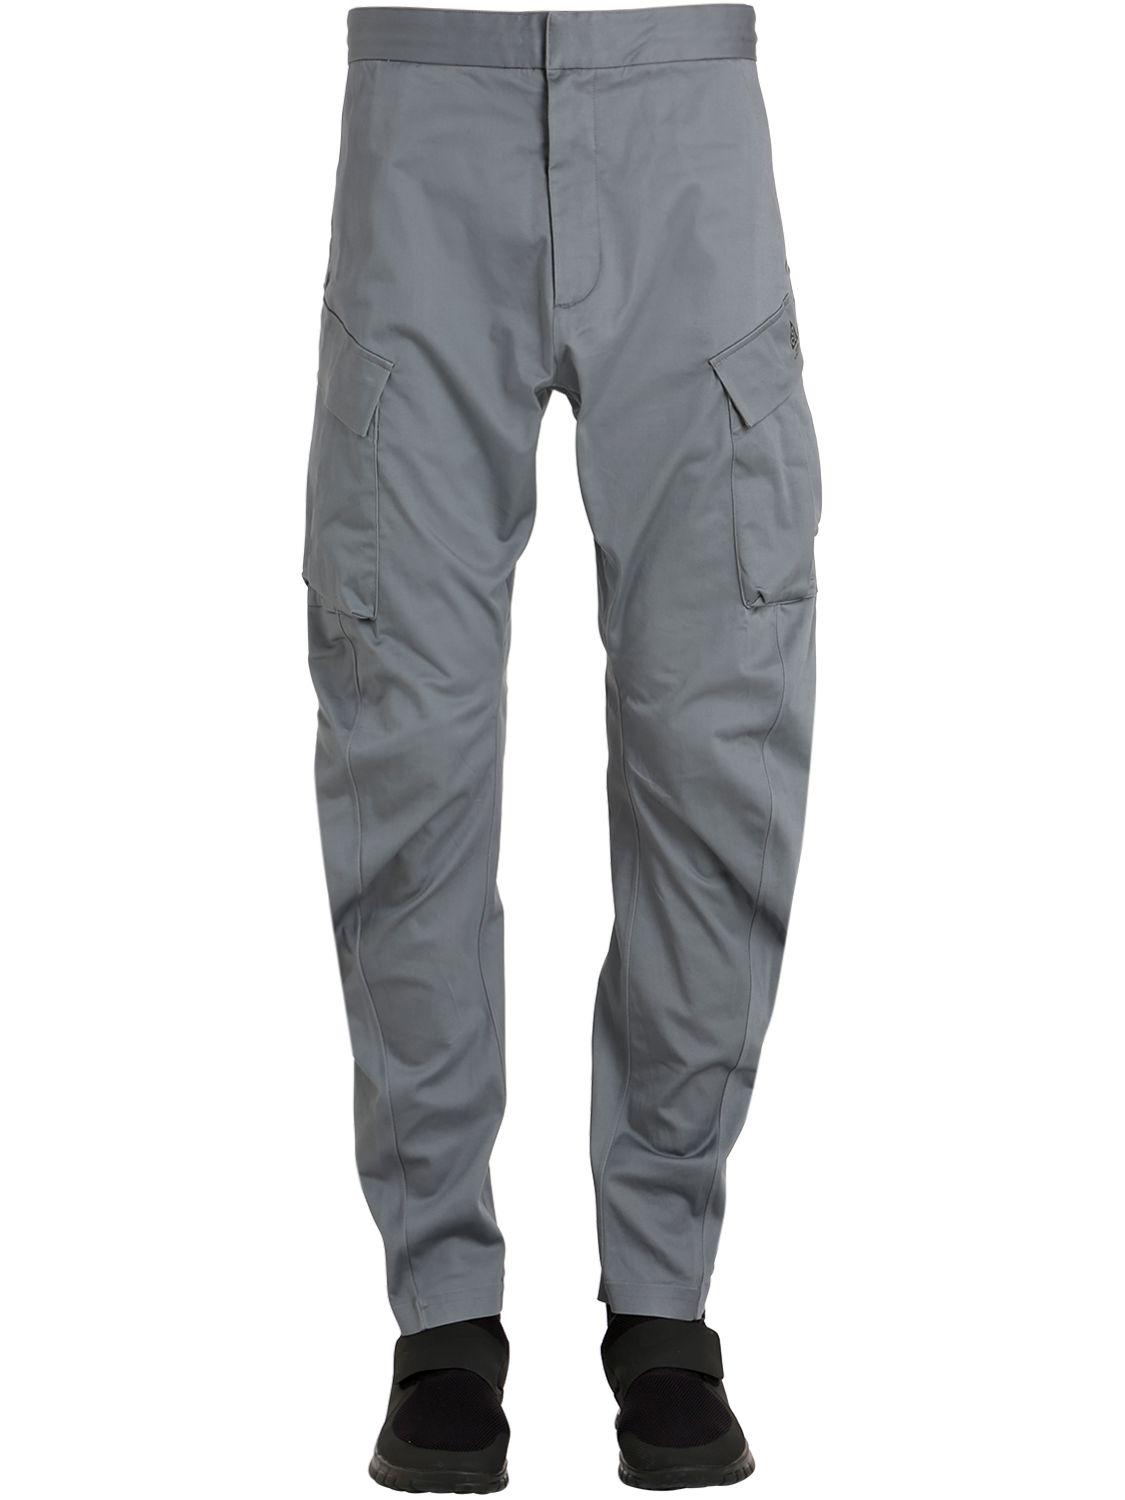 Nike Nikelab Acg Cargo Pants in Grey (Gray) for Men - Lyst